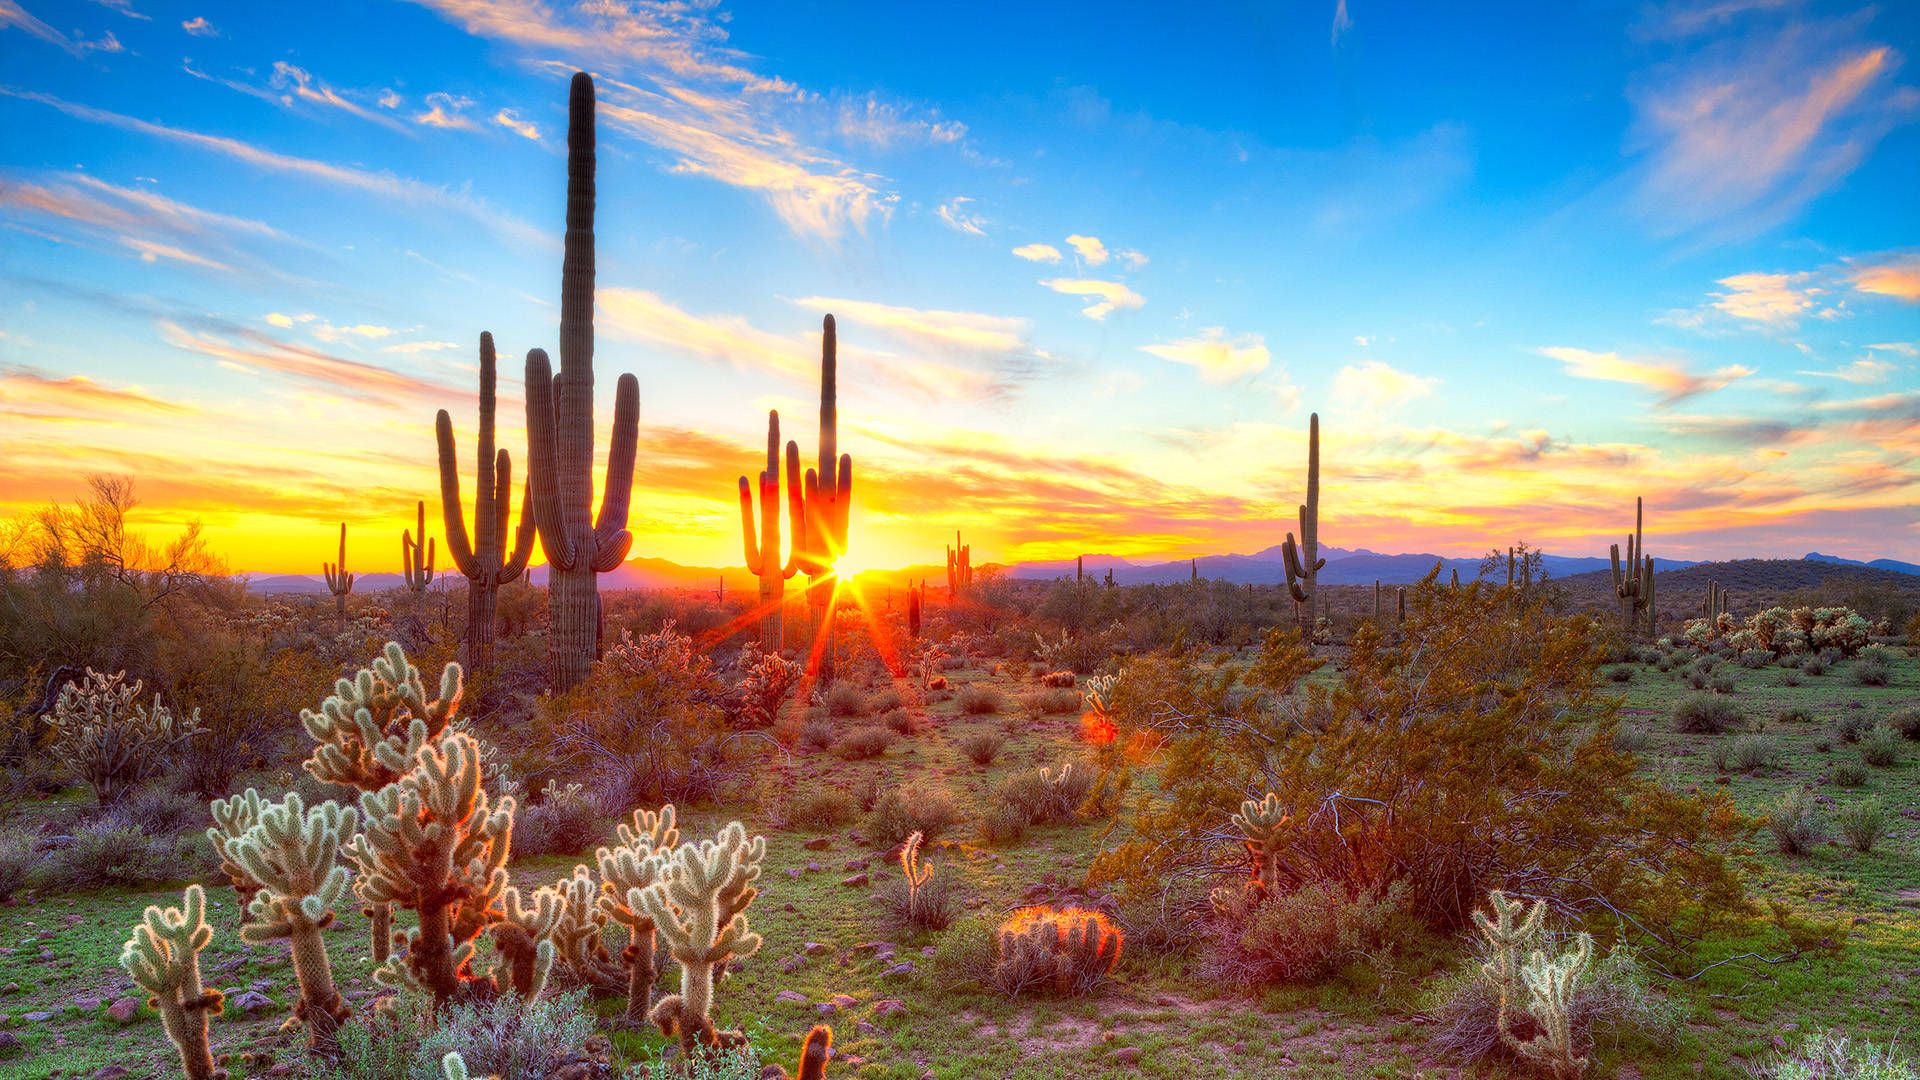 Vibrant Cactus Garden Arizona Desert Background